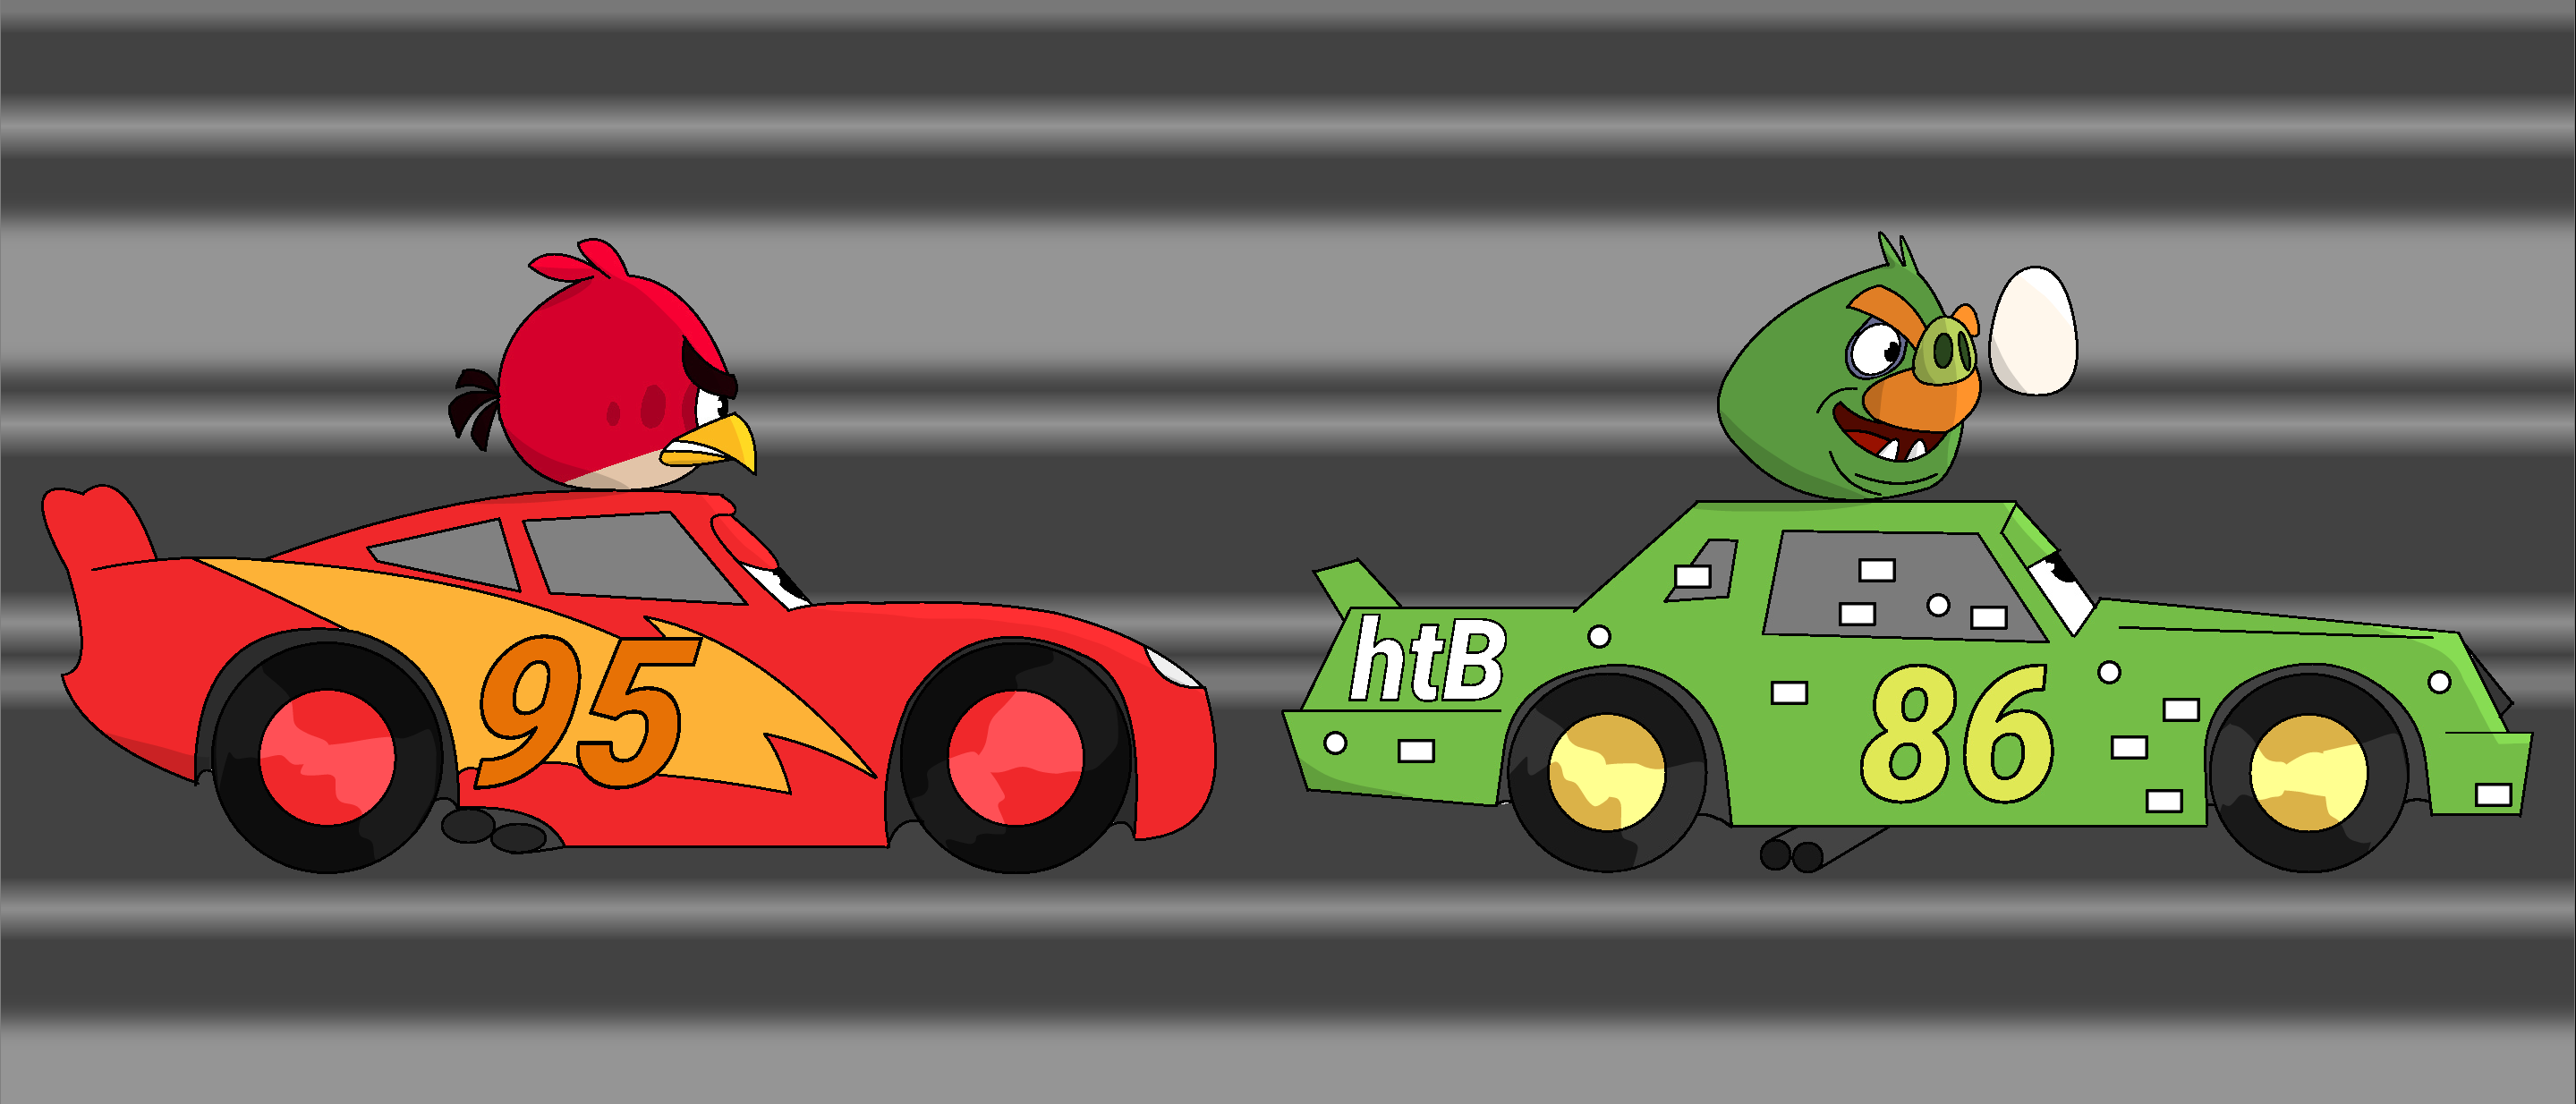 Wealthy Rogue  Angry birds, Enemy, Disney pixar cars